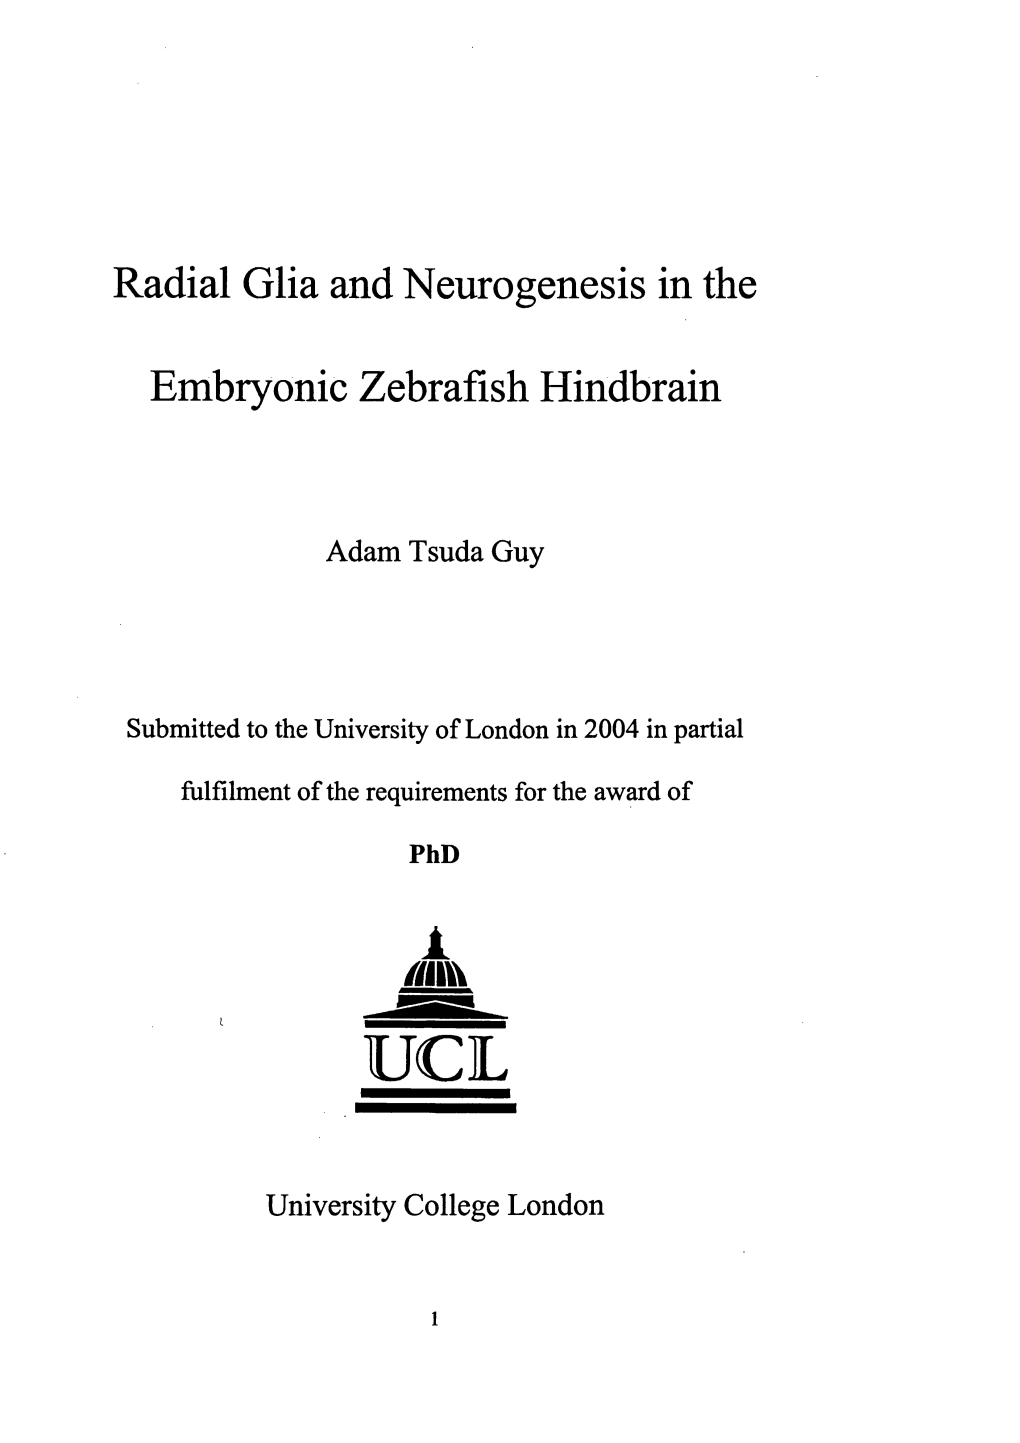 Radial Glia and Neurogenesis in the Embryonic Zebrafish Hindbrain